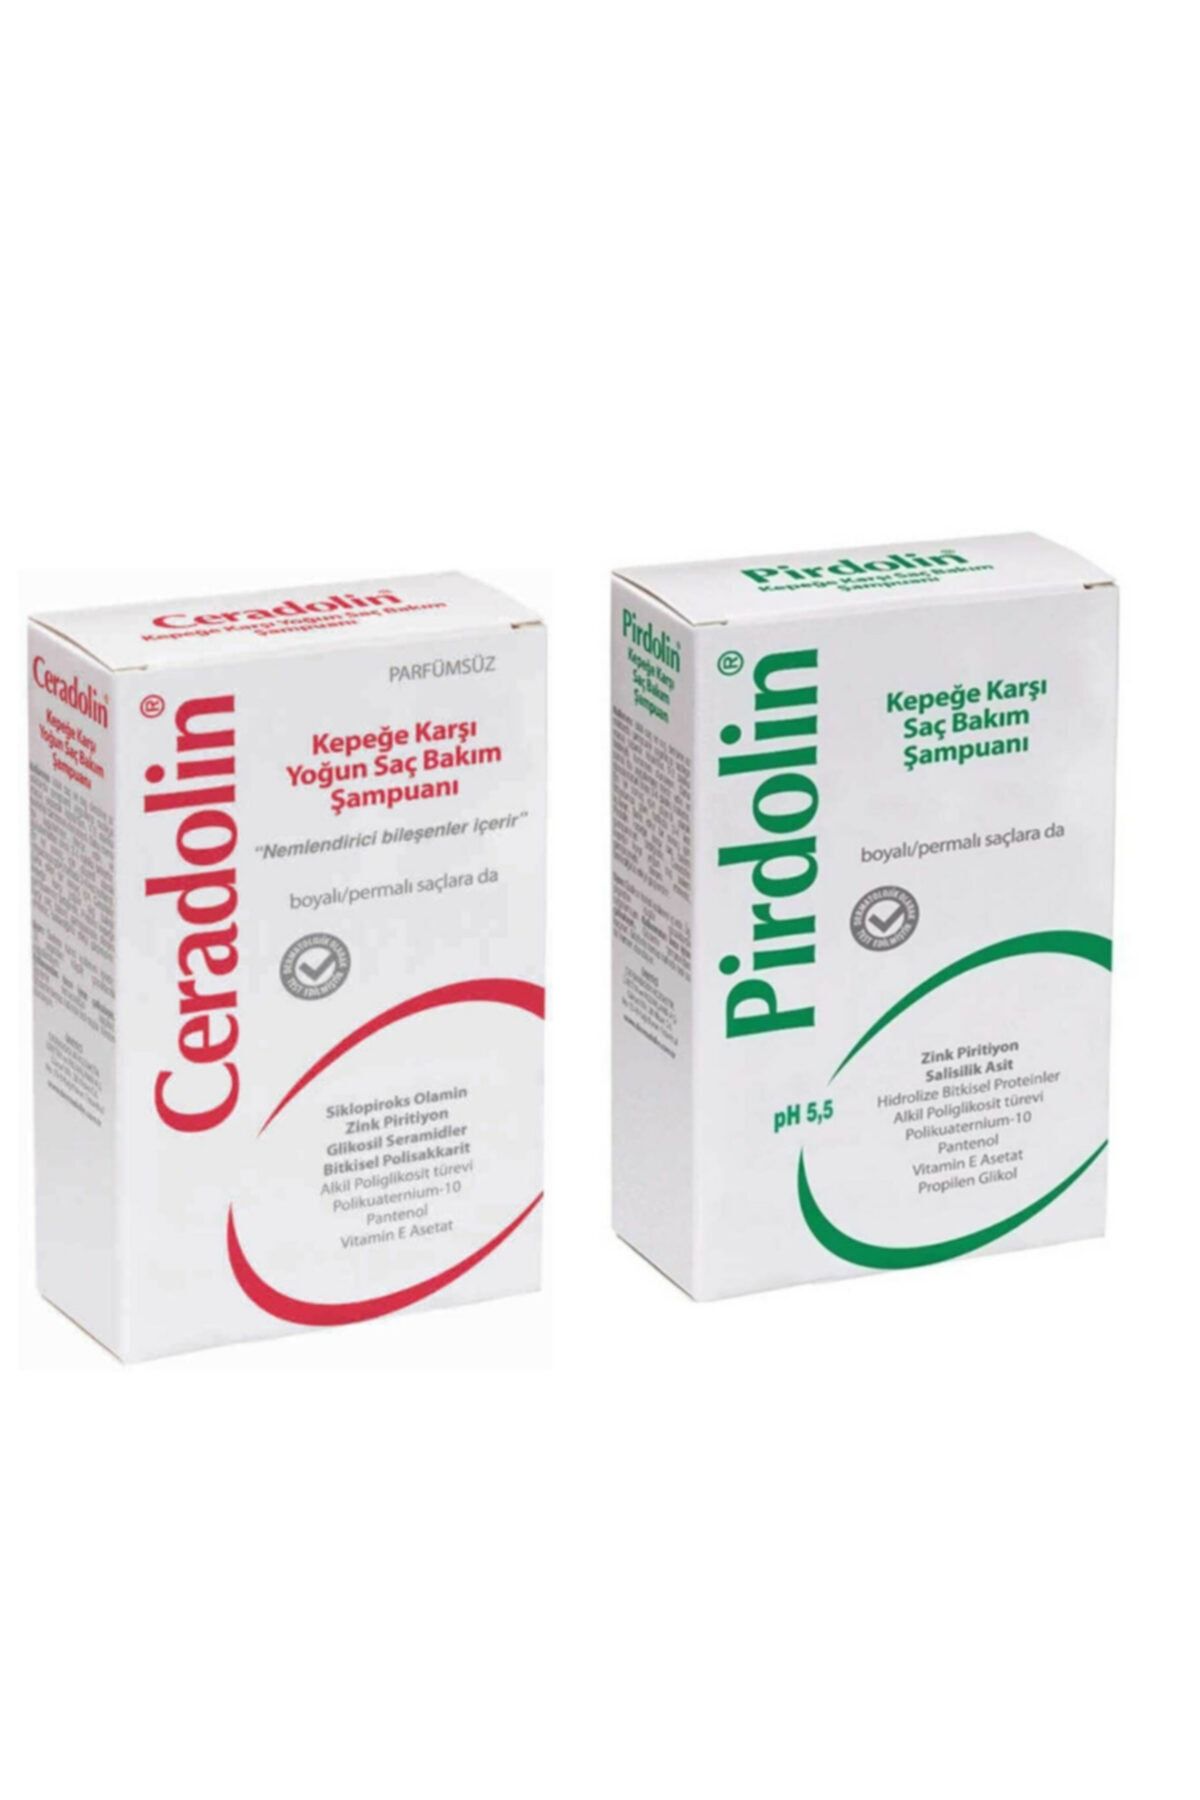 Dermadolin Ceradolin 300ml + Pirdolin 300ml